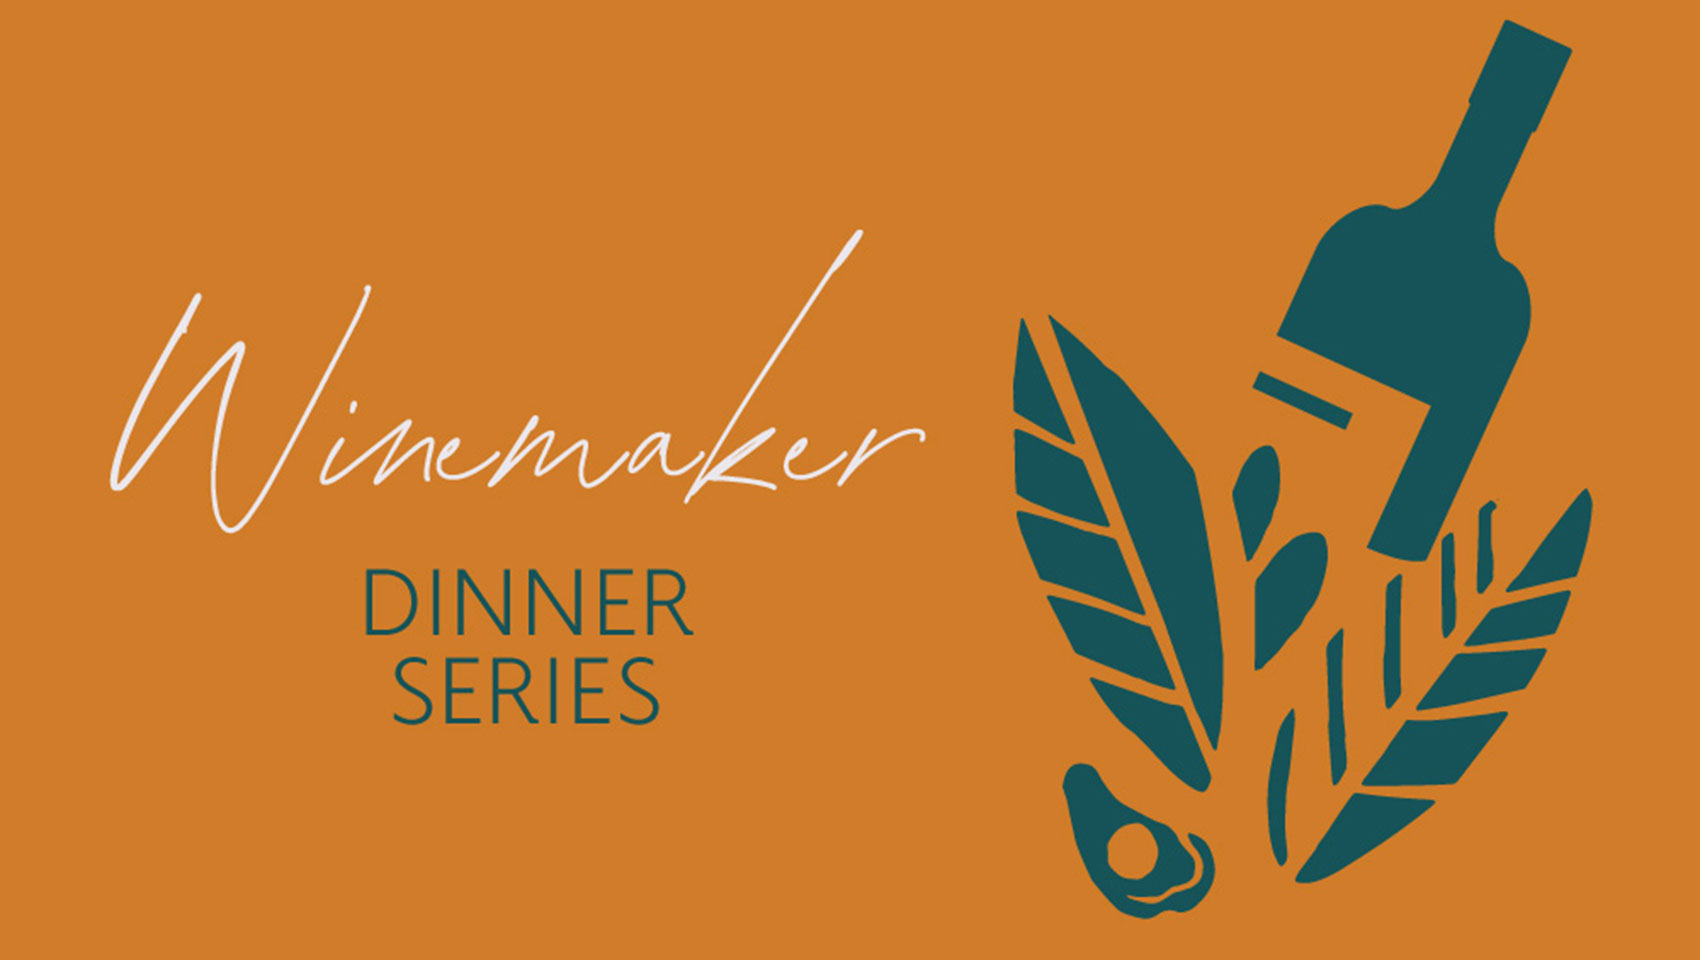 Winemaker Dinner Series flyer with illustration of wine bottle and leaves - Thursday, June 22 | 7pm